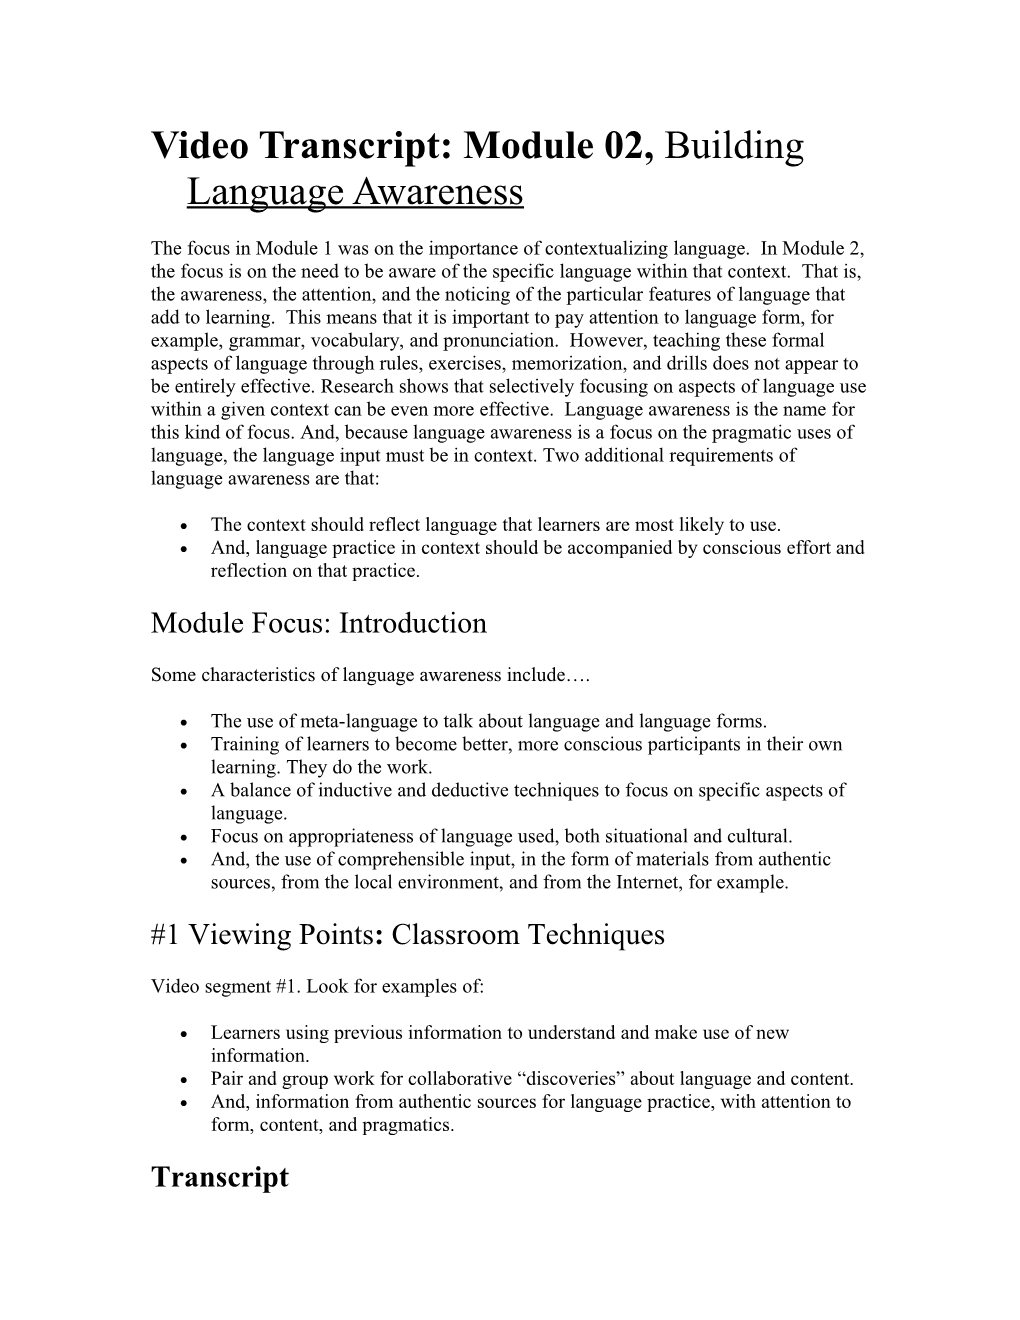 Video Transcript: Module 02, Building Language Awareness